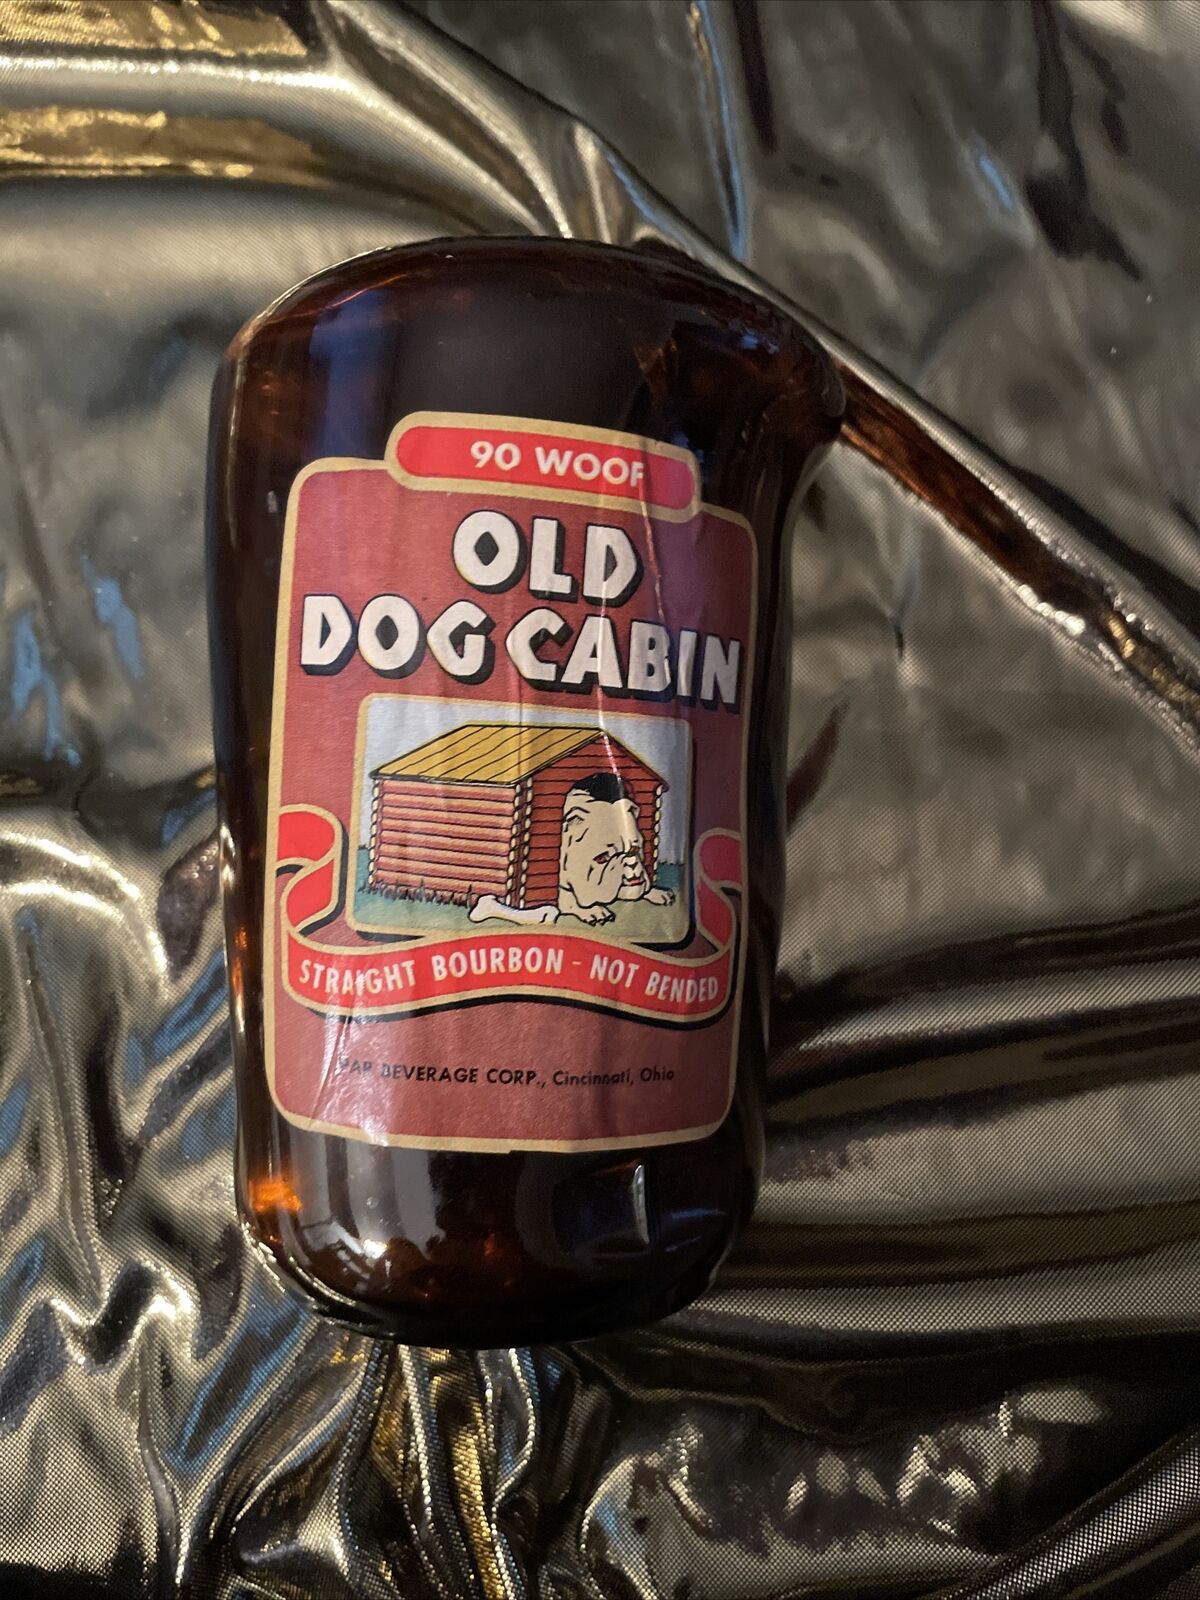 OLD DOG CABIN Bottle Straight Bourbon  English Bulldog 90 Woof PAR beverage Corp